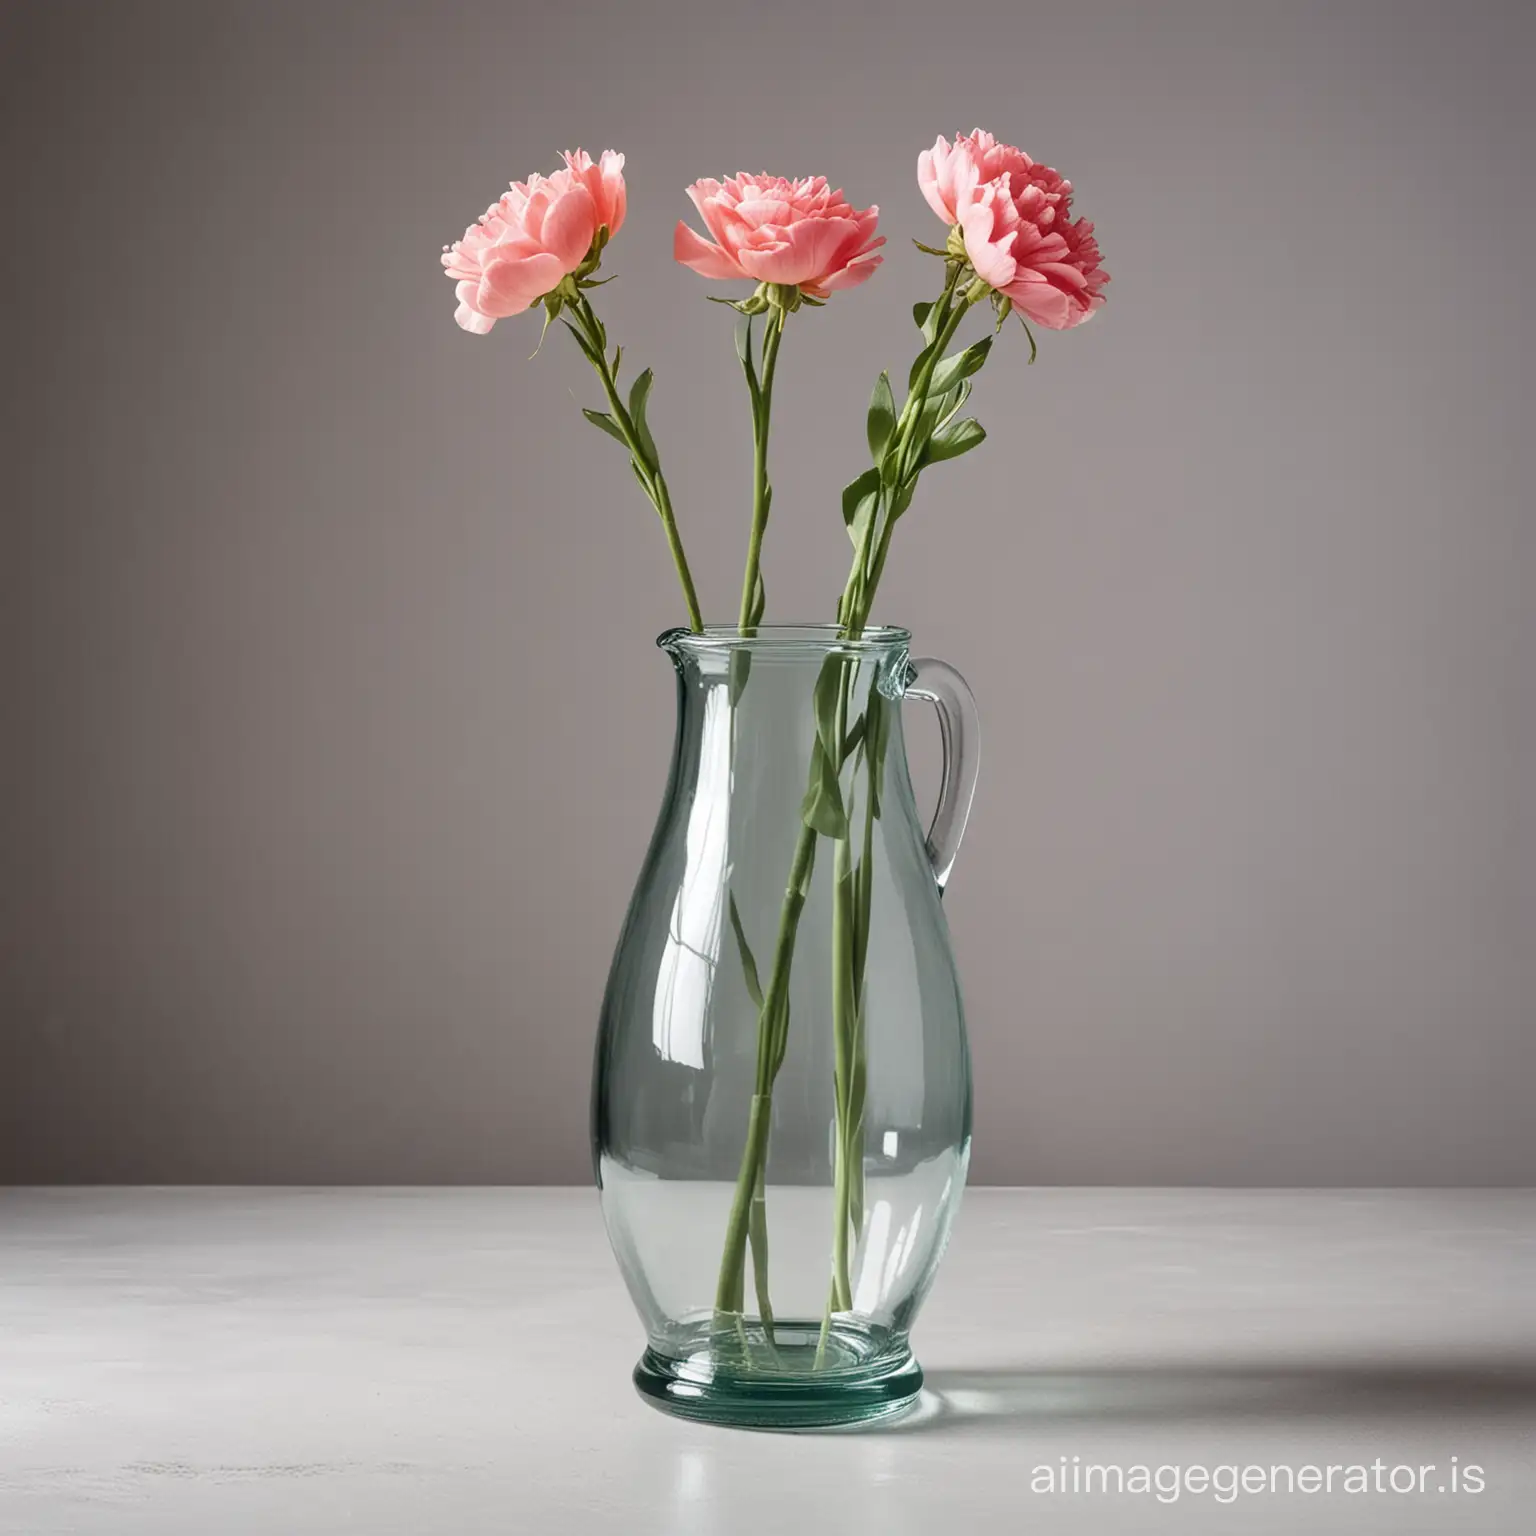 Classic-Glass-Vase-for-Timeless-Floral-Arrangements